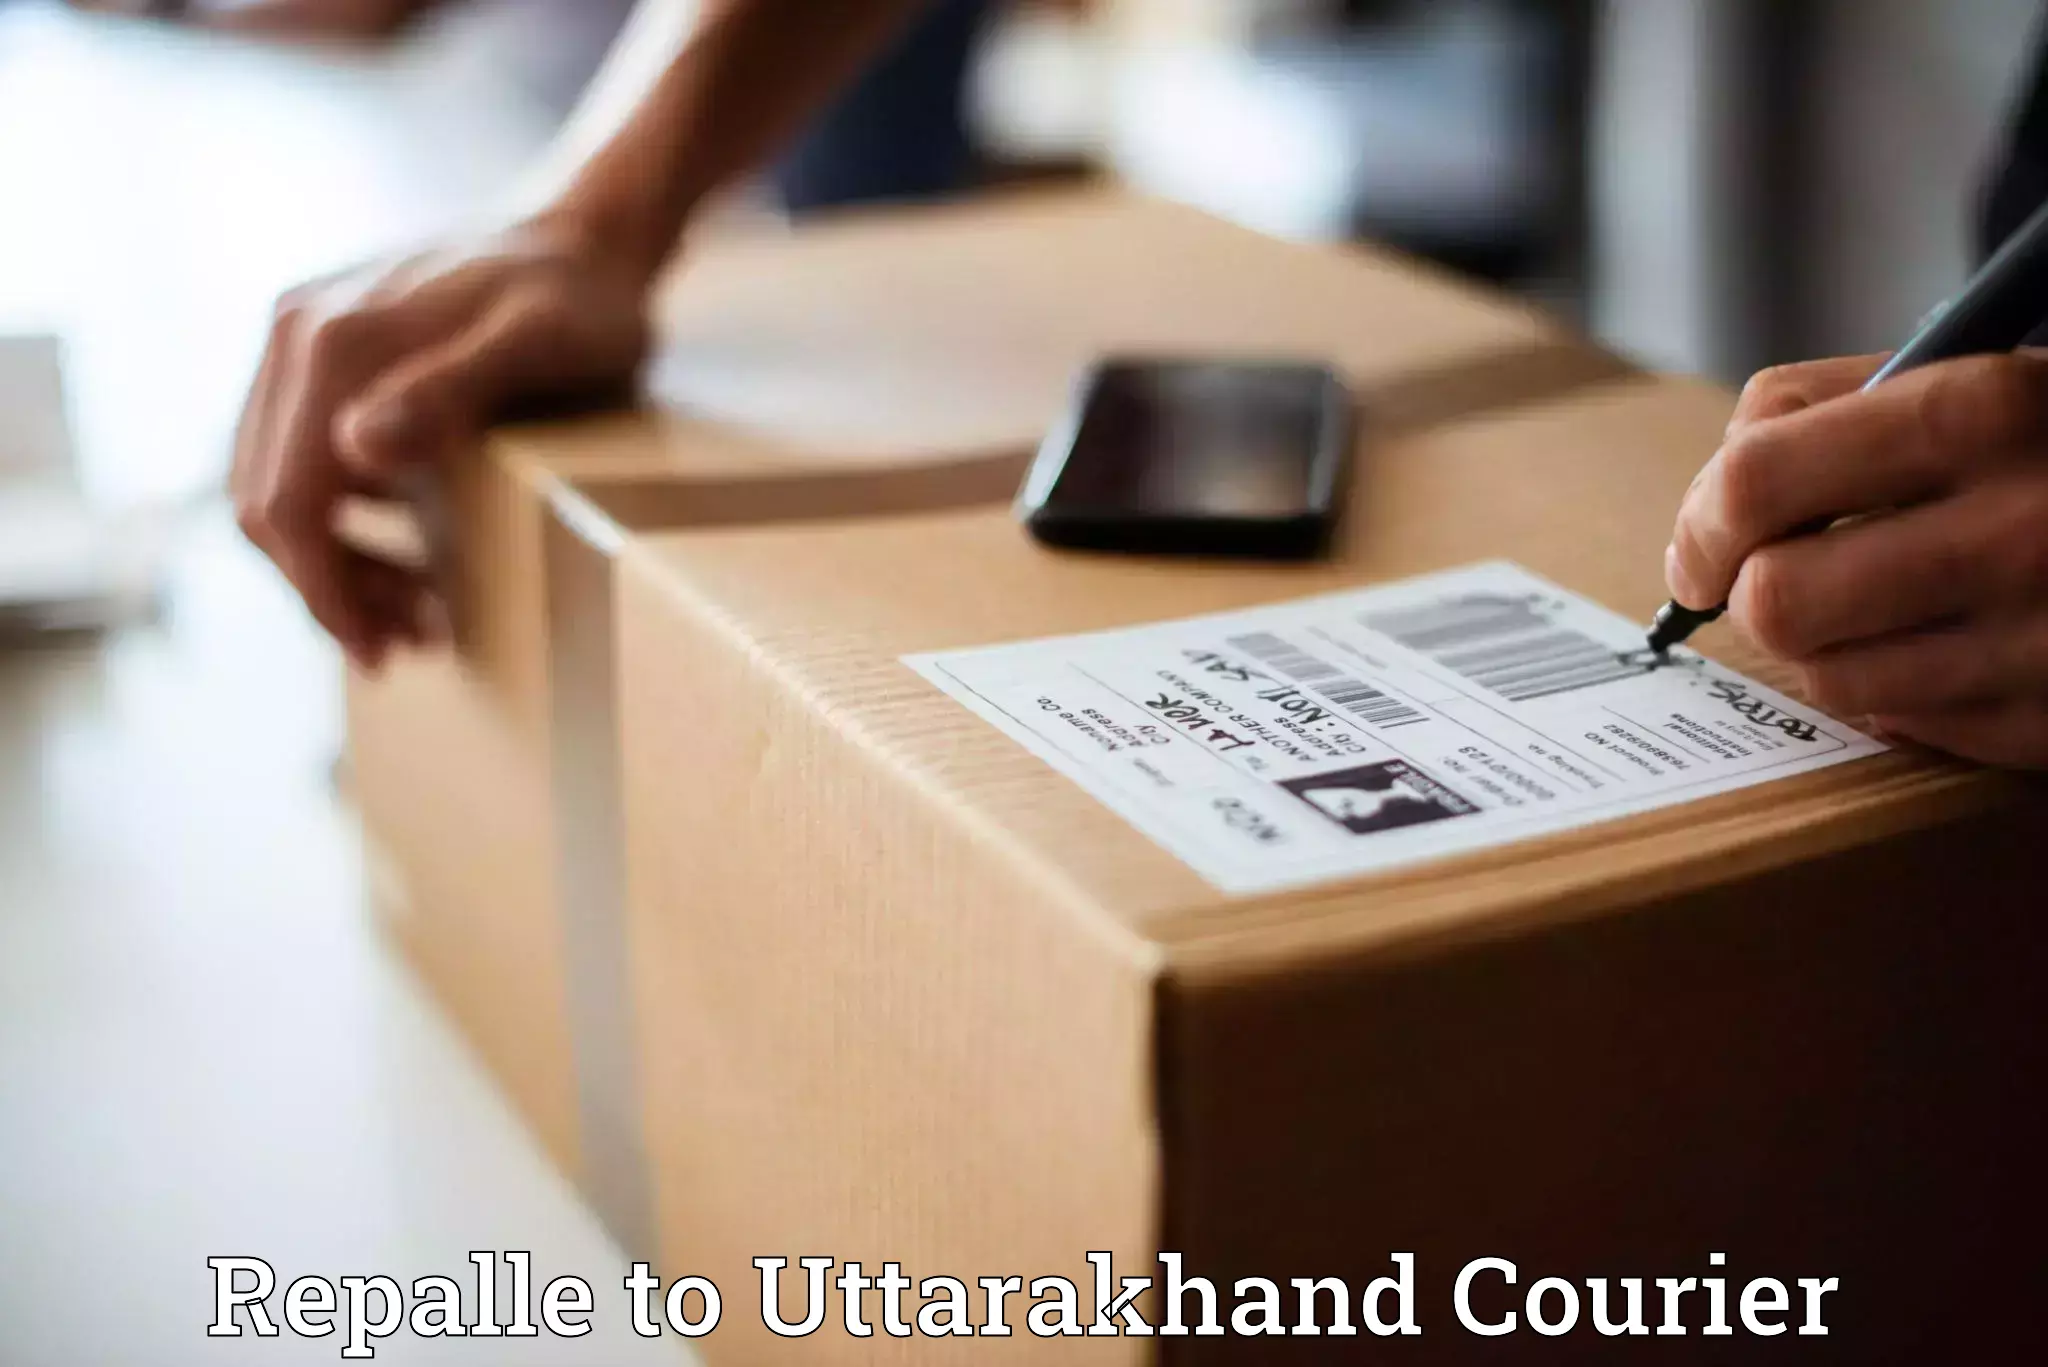 Modern courier technology Repalle to Dehradun